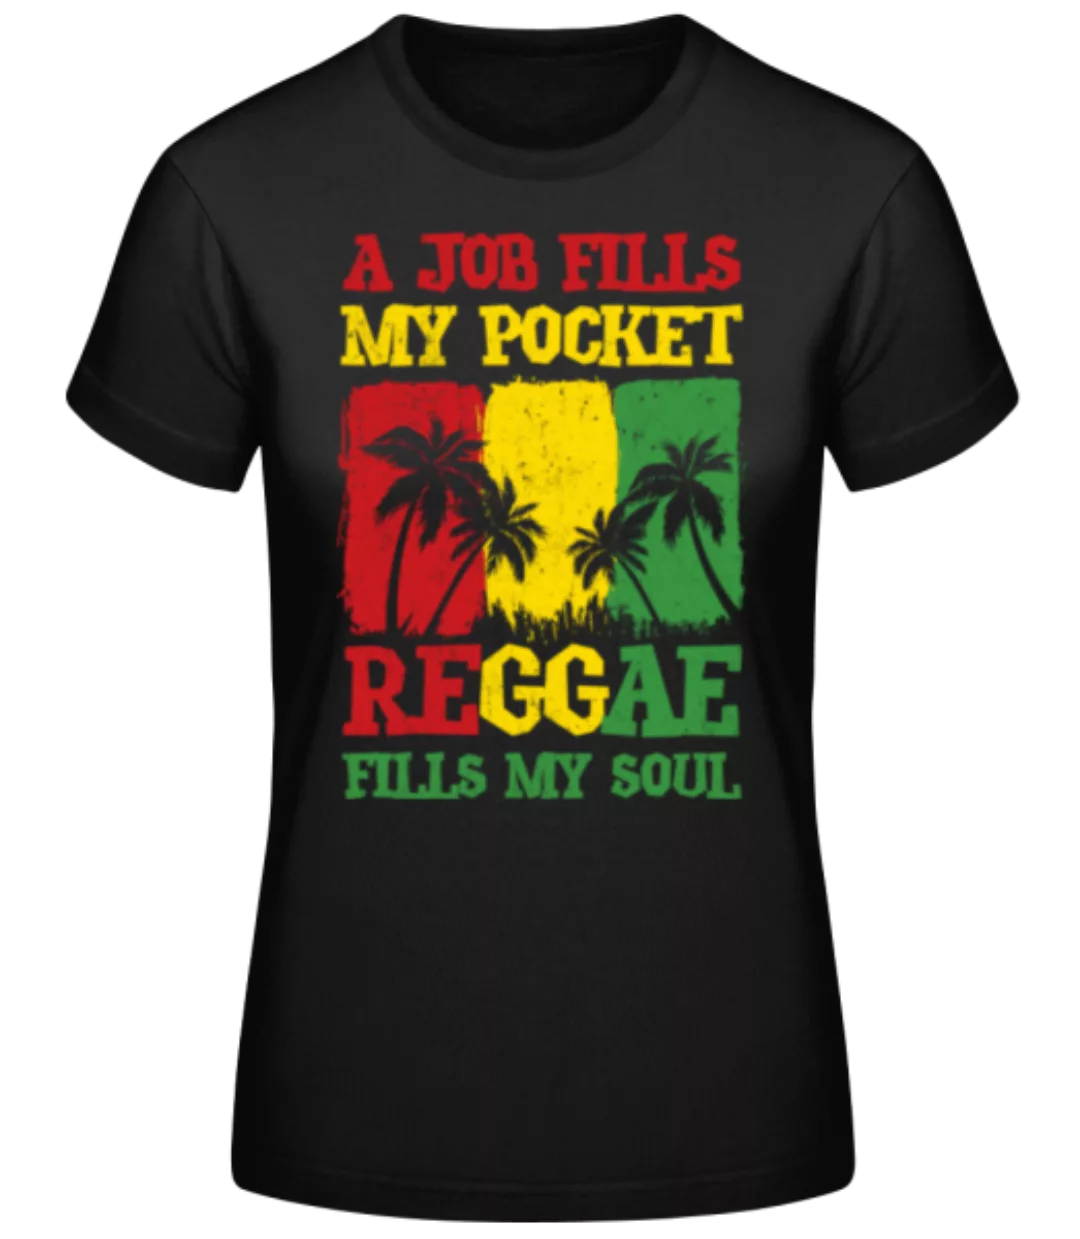 Reggae Fills My Soul · Frauen Basic T-Shirt günstig online kaufen